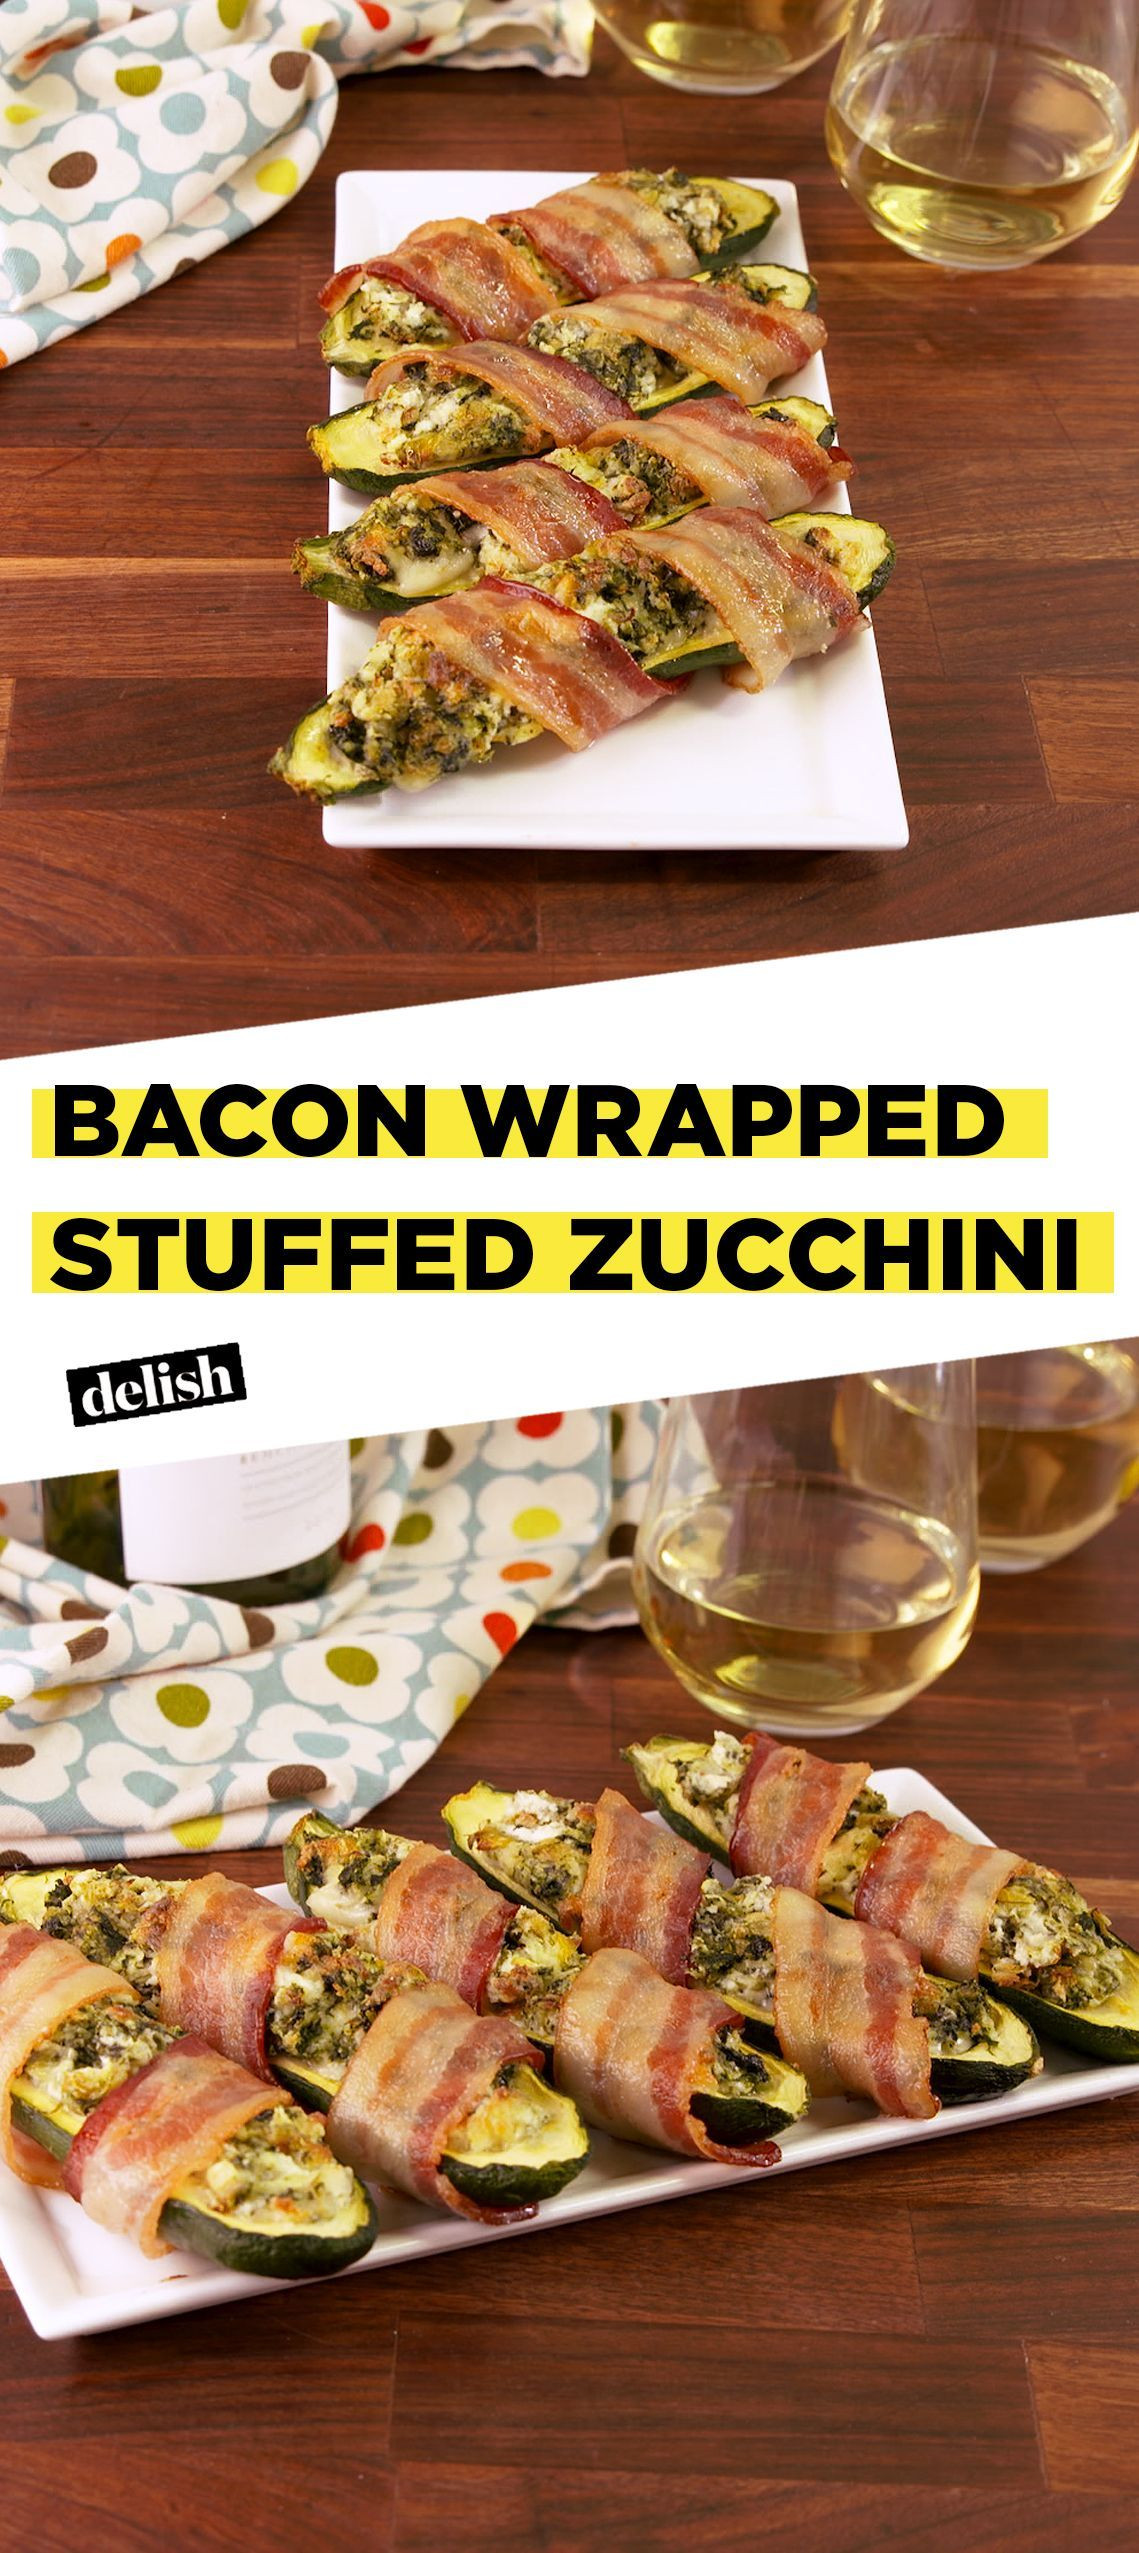 Bacon Wrapped Zucchini Keto
 Bacon Wrapped Stuffed Zucchini Recipe